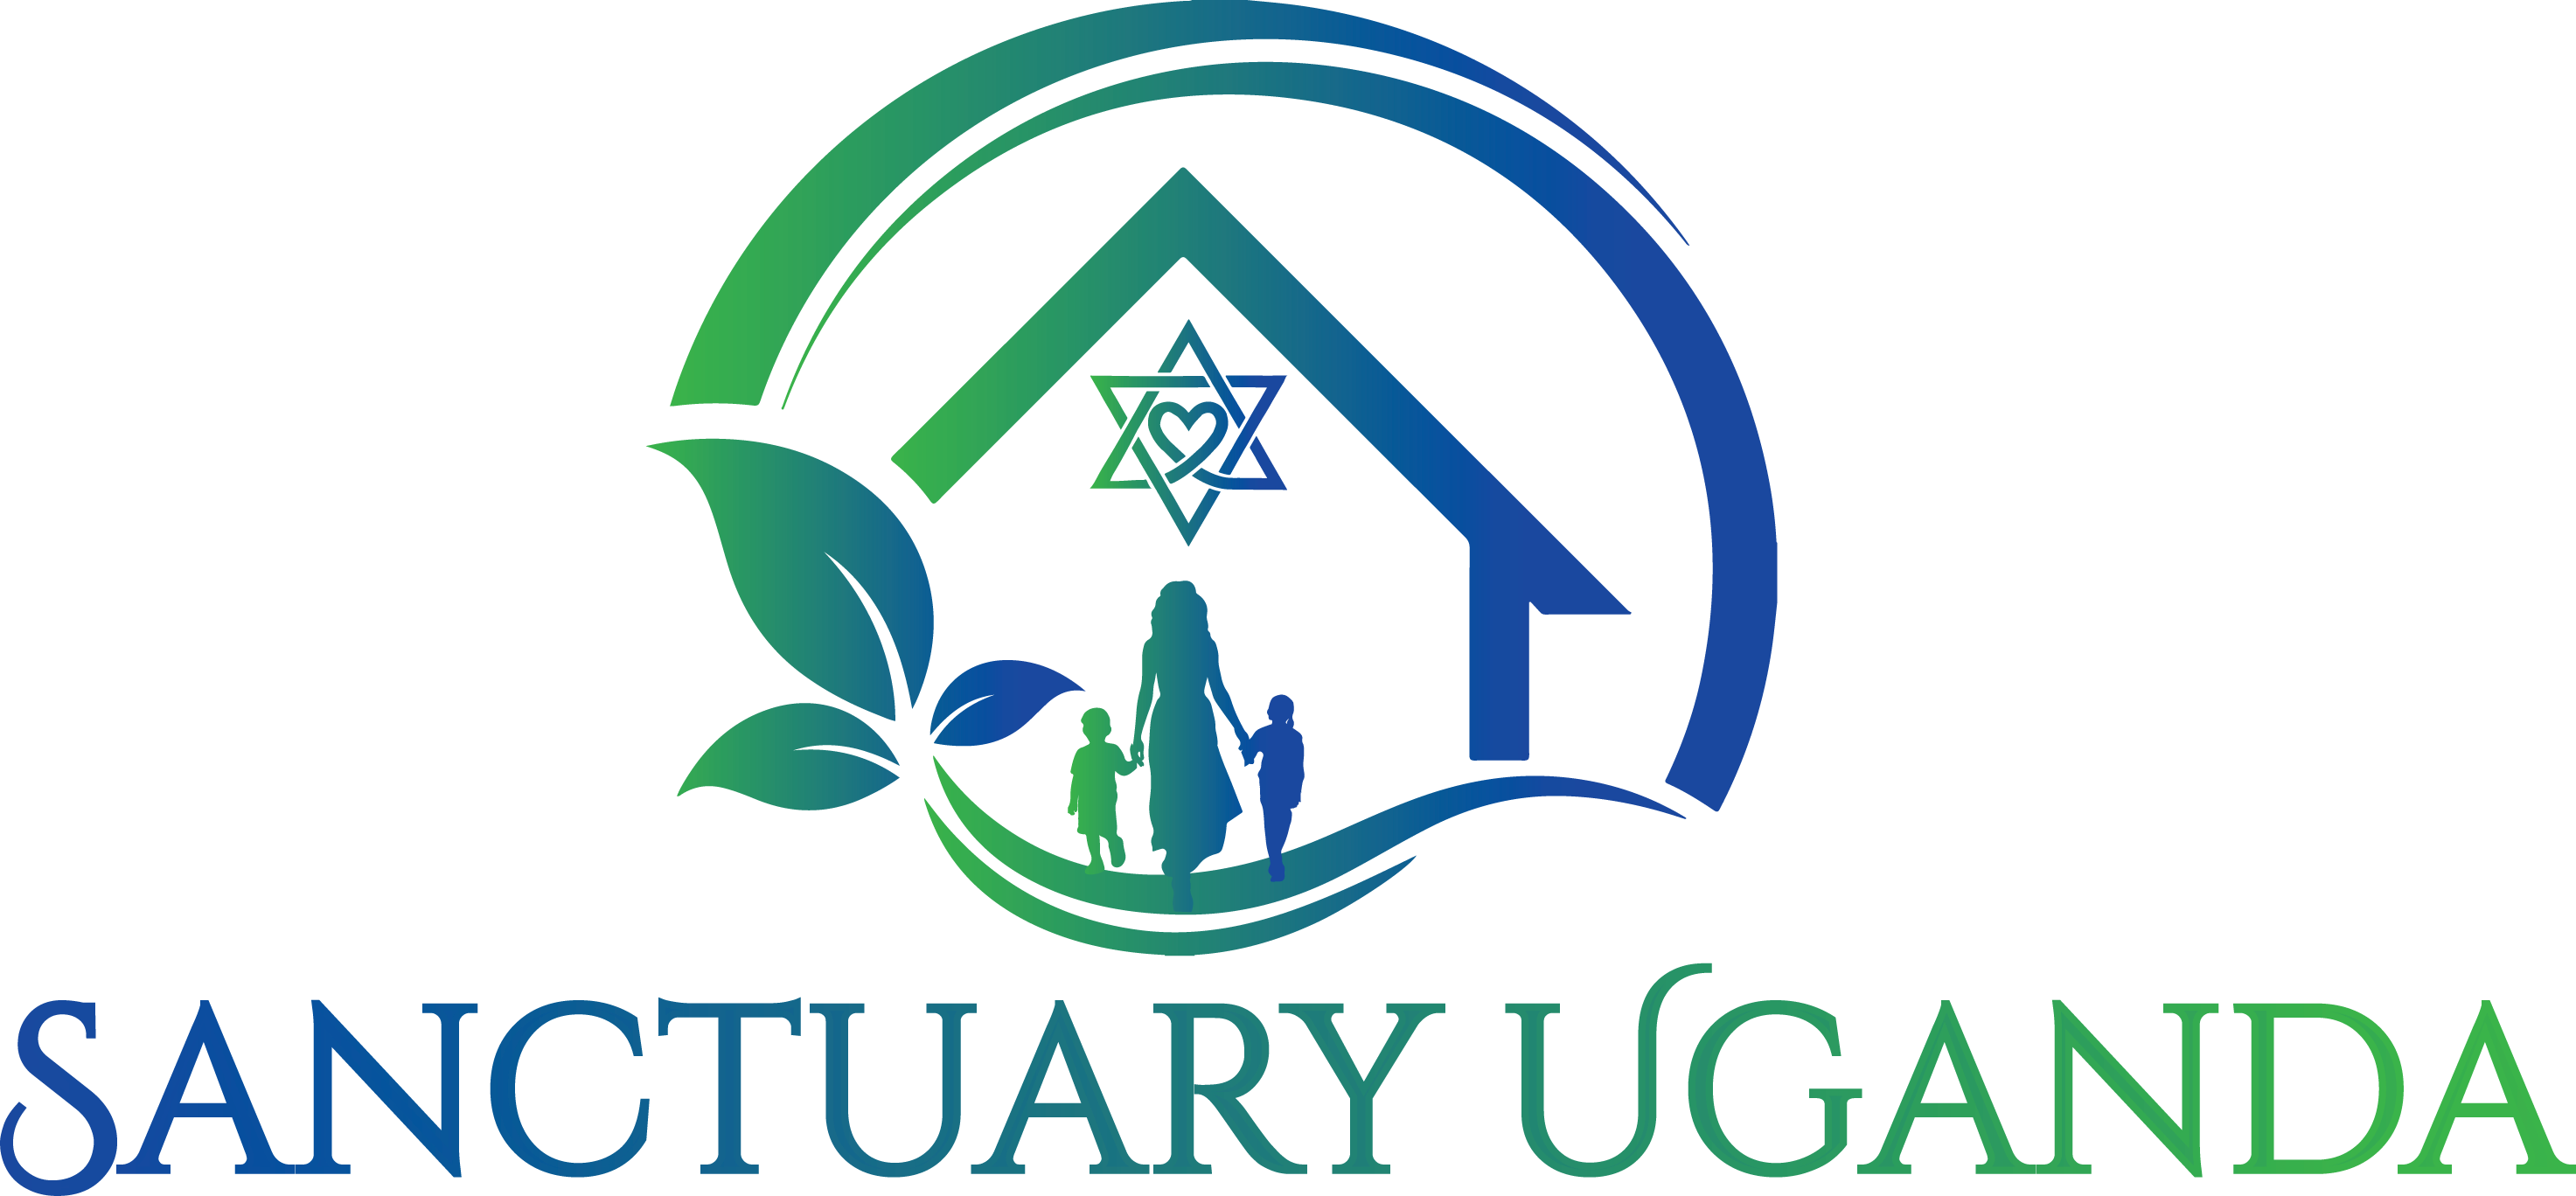 Sanctuary Uganda Logo